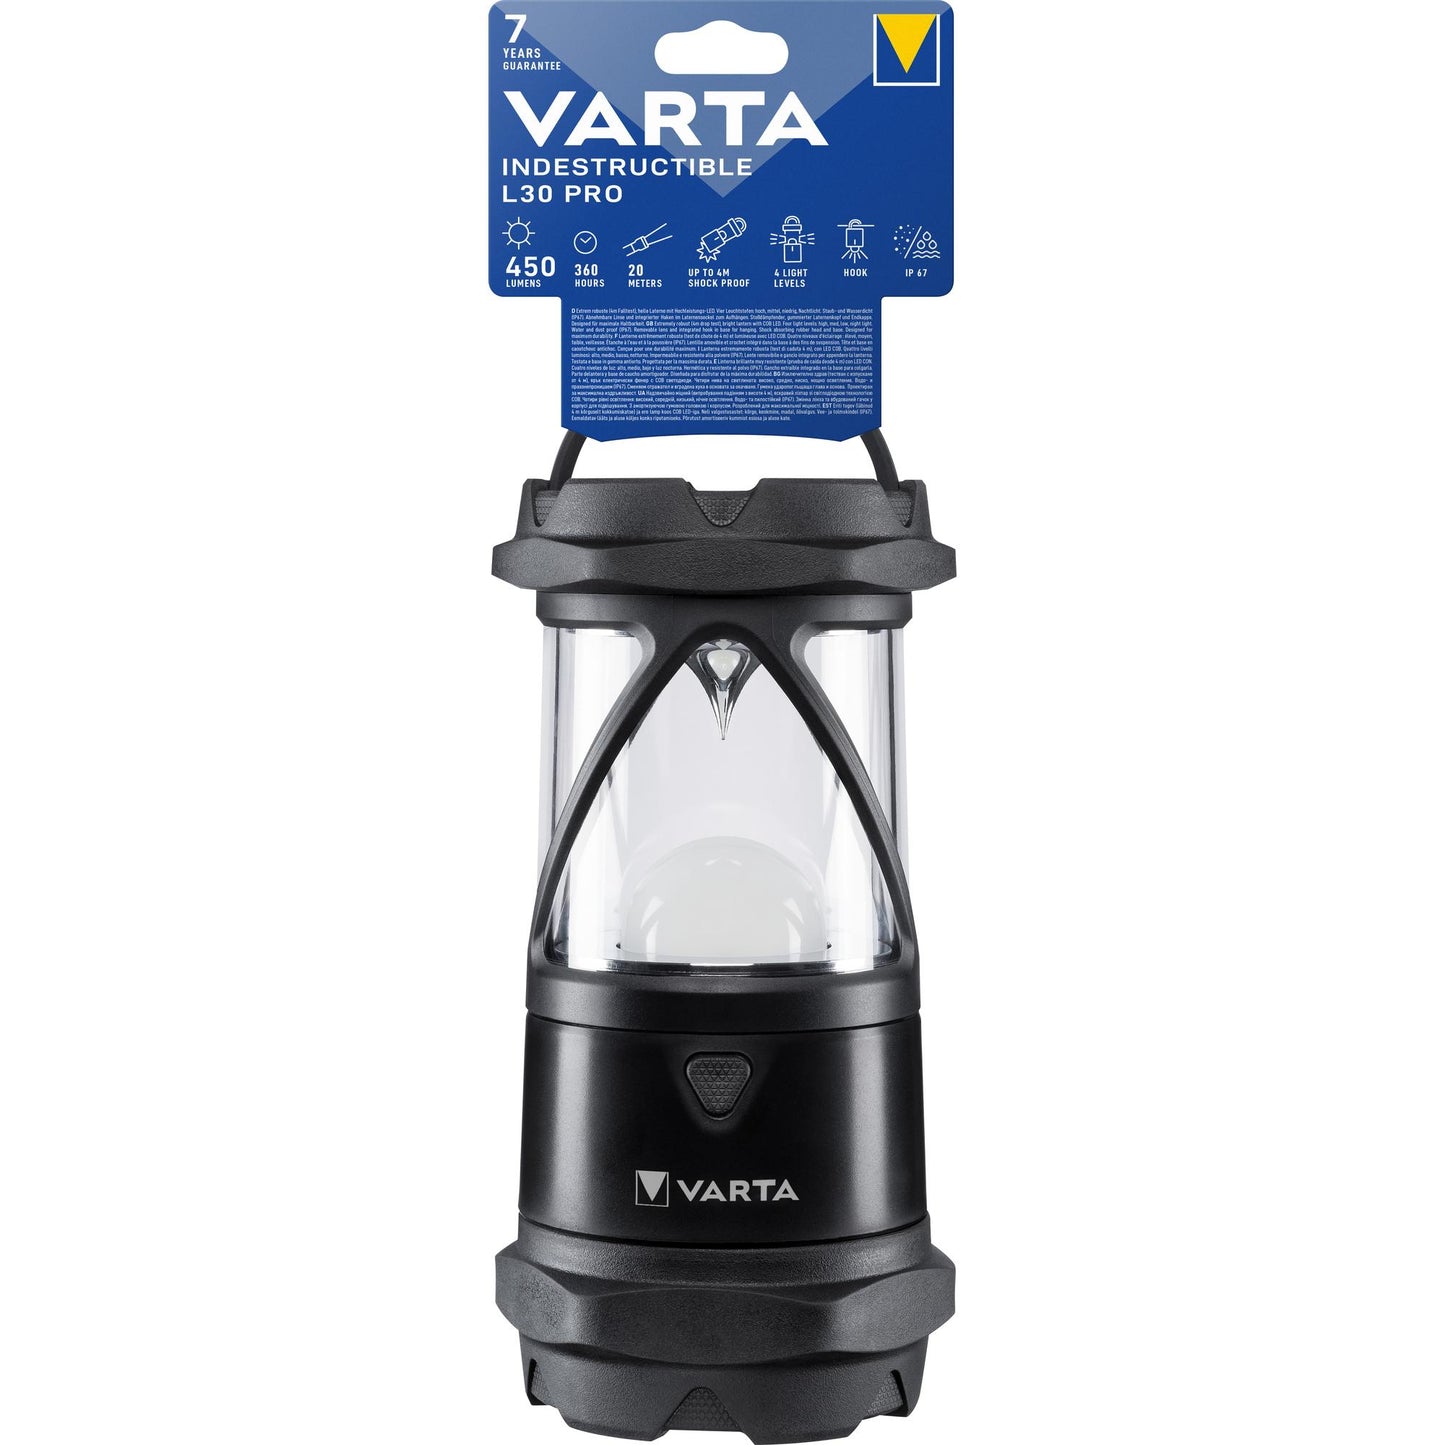 VARTA Indestructible L30 Pro LED Taschenlampe - 450lm exkl. 6x AA Alkaline Batterie Retail Blister